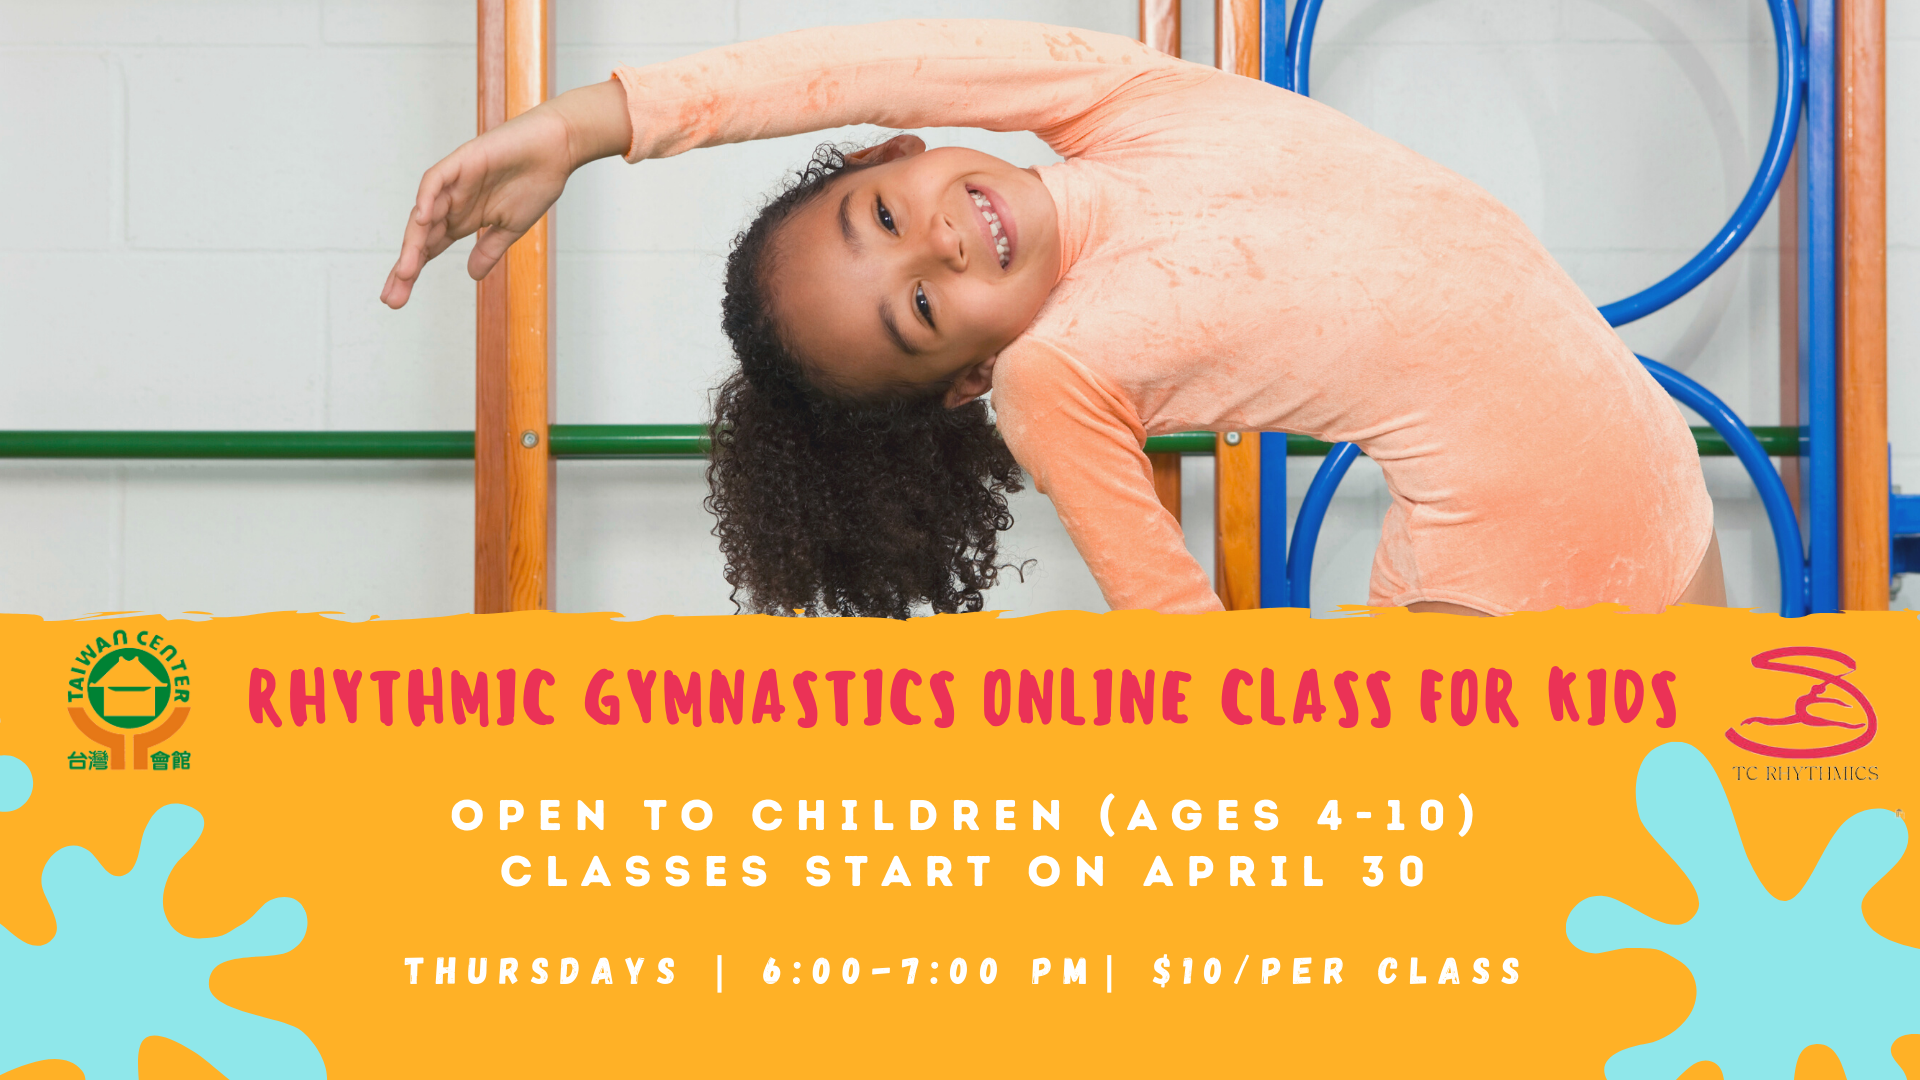 April and May 2020 線上韻律體操課程Online Rhythmic Gymnastics Class for Kids